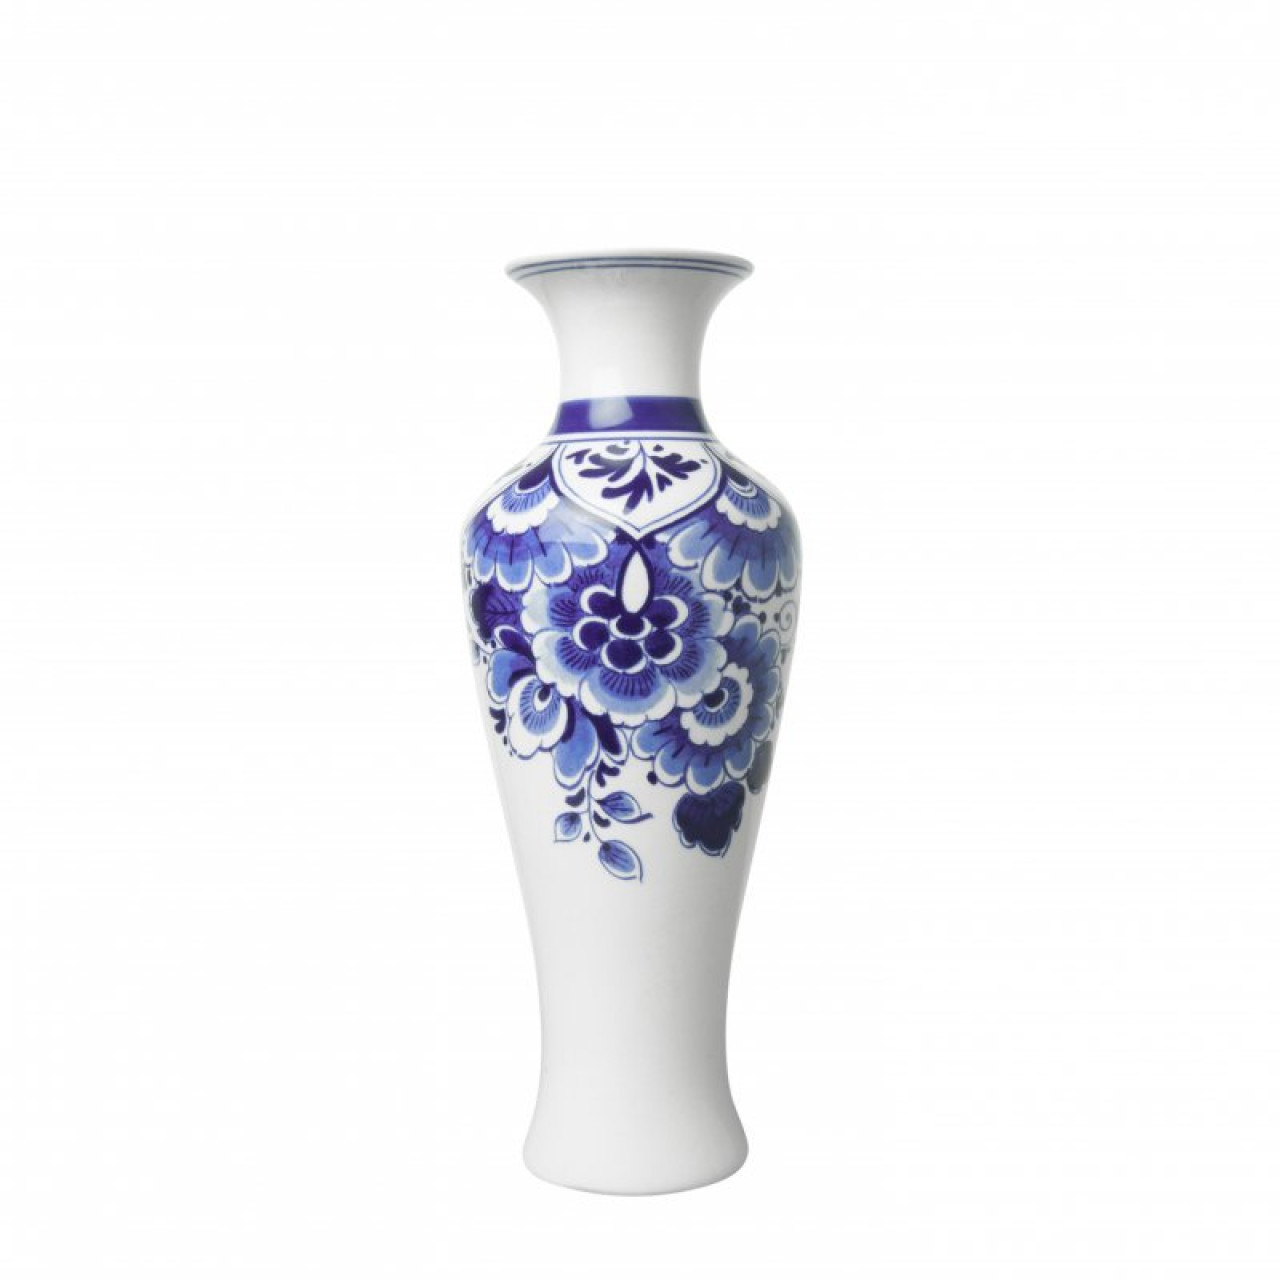 Anekdote Clancy Okkernoot Buy Slender vase flowers » Heinen Delfts Blauw